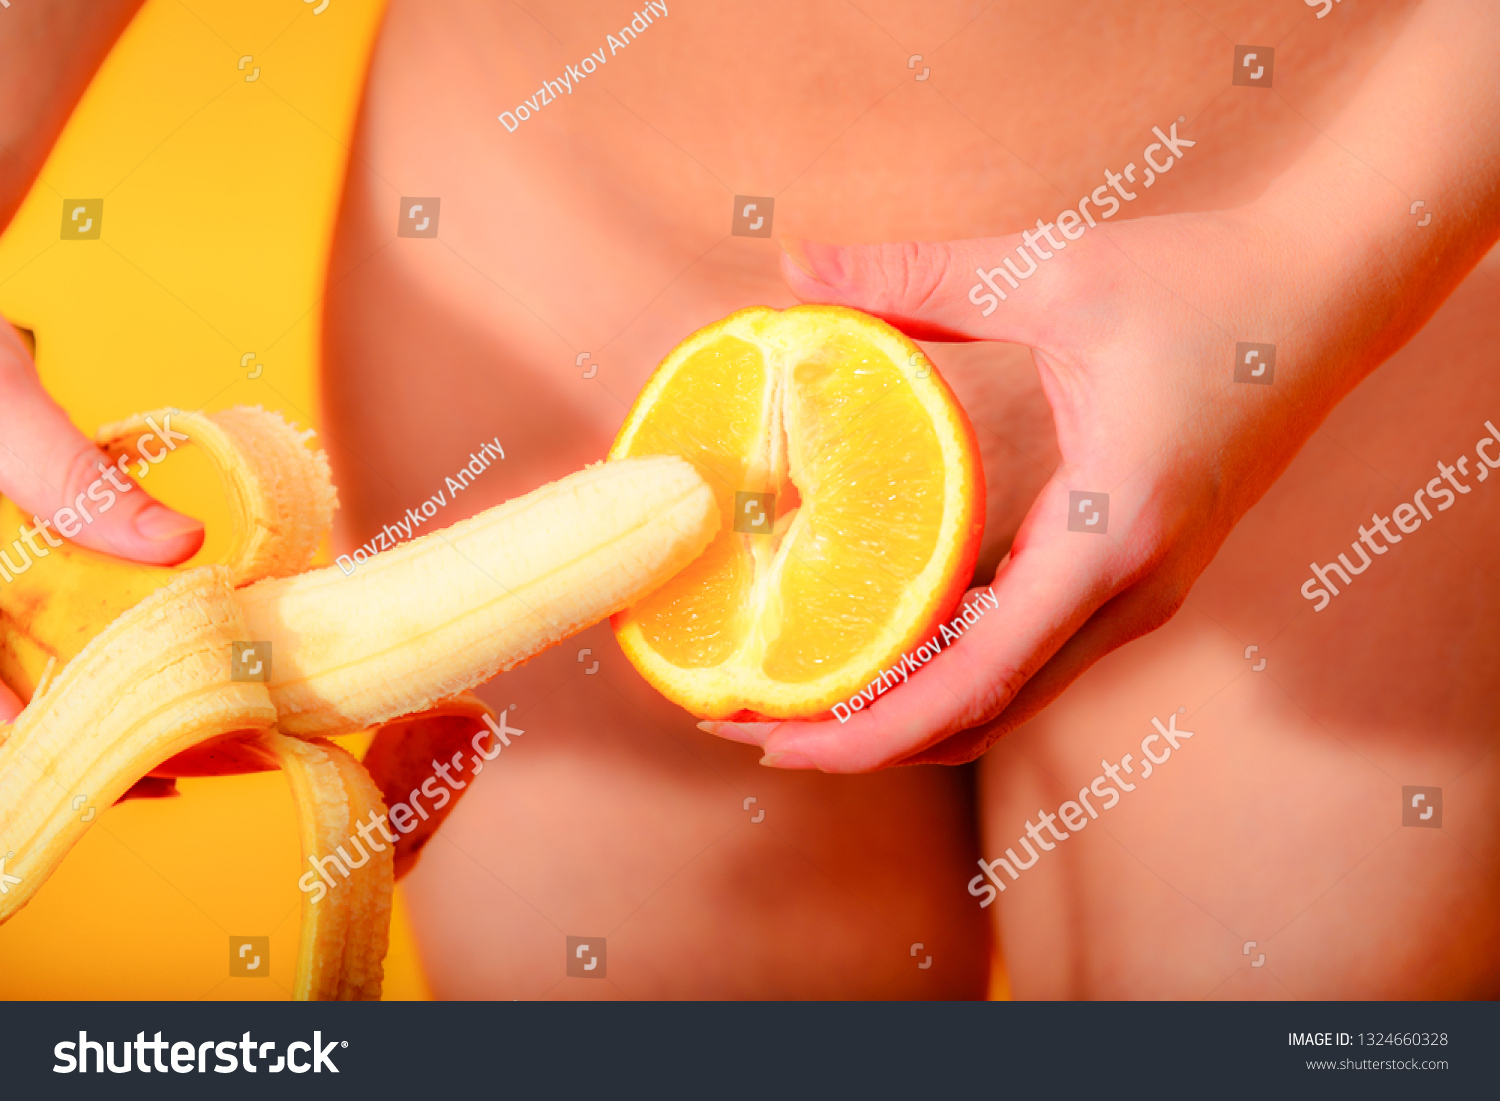 Naked Girl Masturbate With Banana